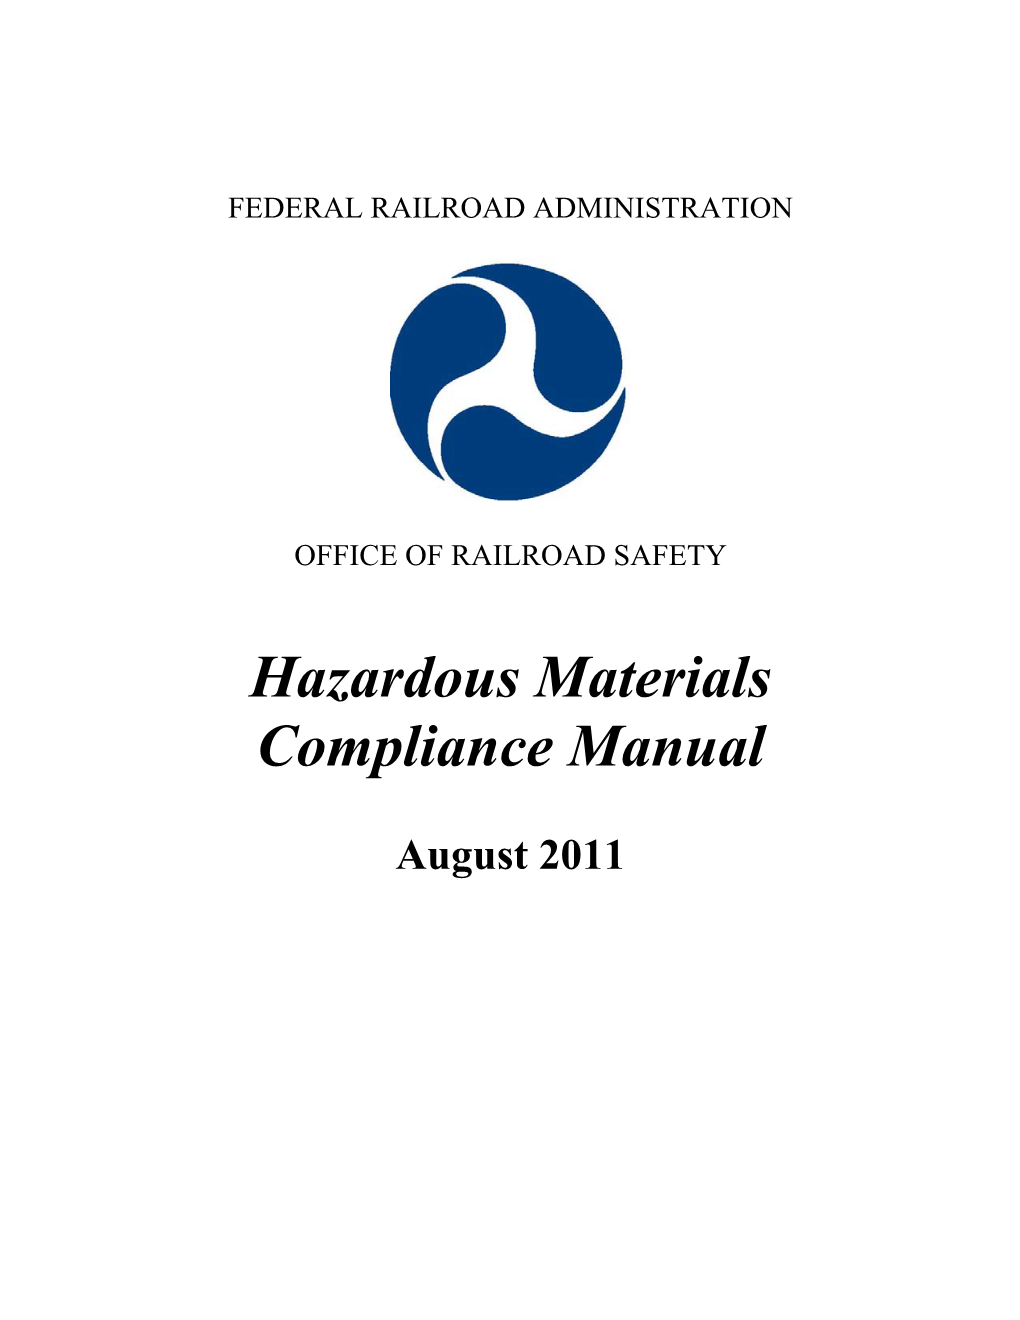 Hazardous Materials Compliance Manual